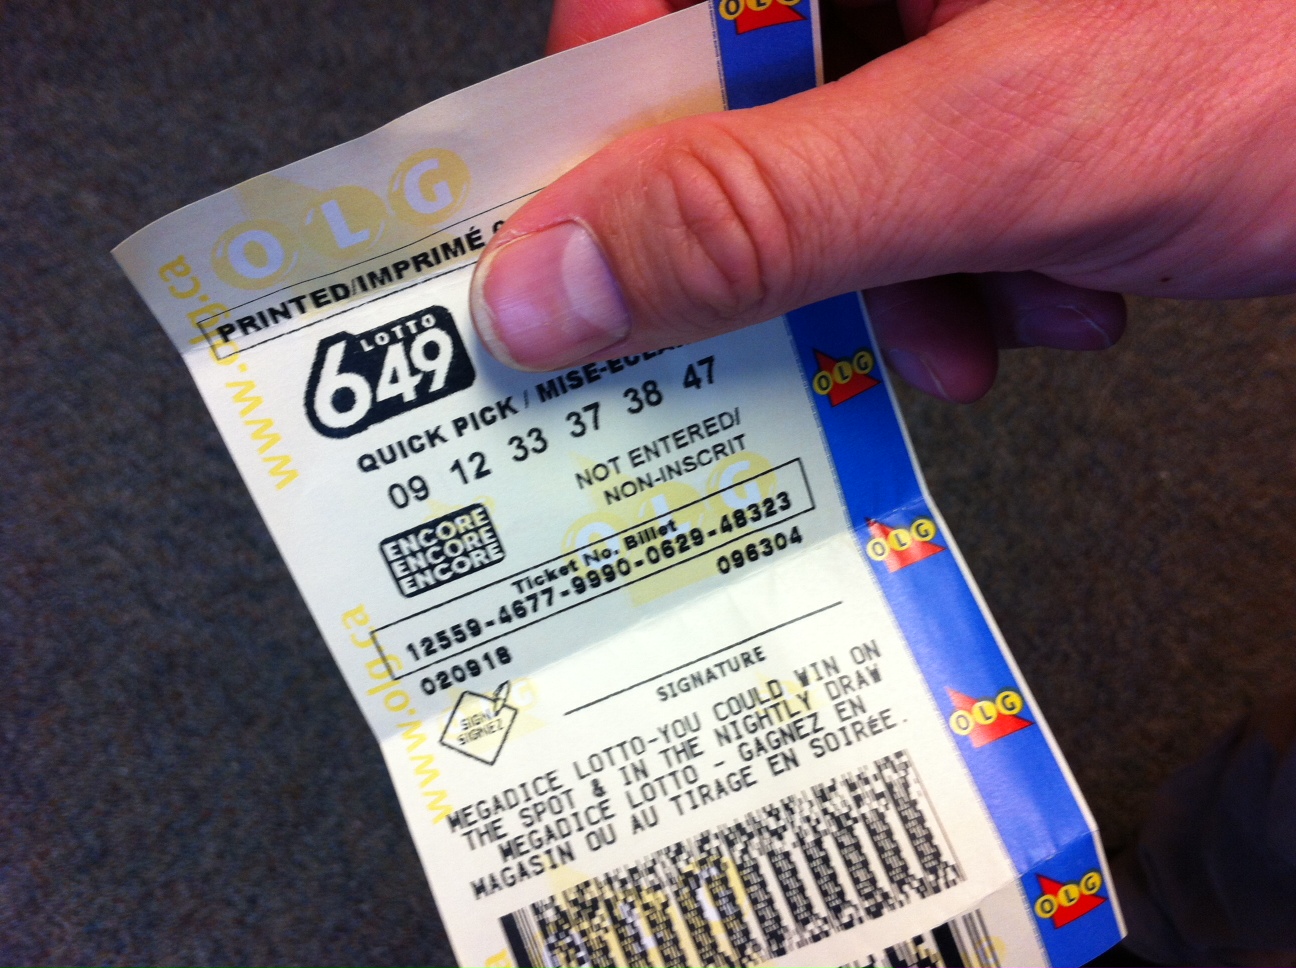 Lotto 6/49 Canada Winning Numbers